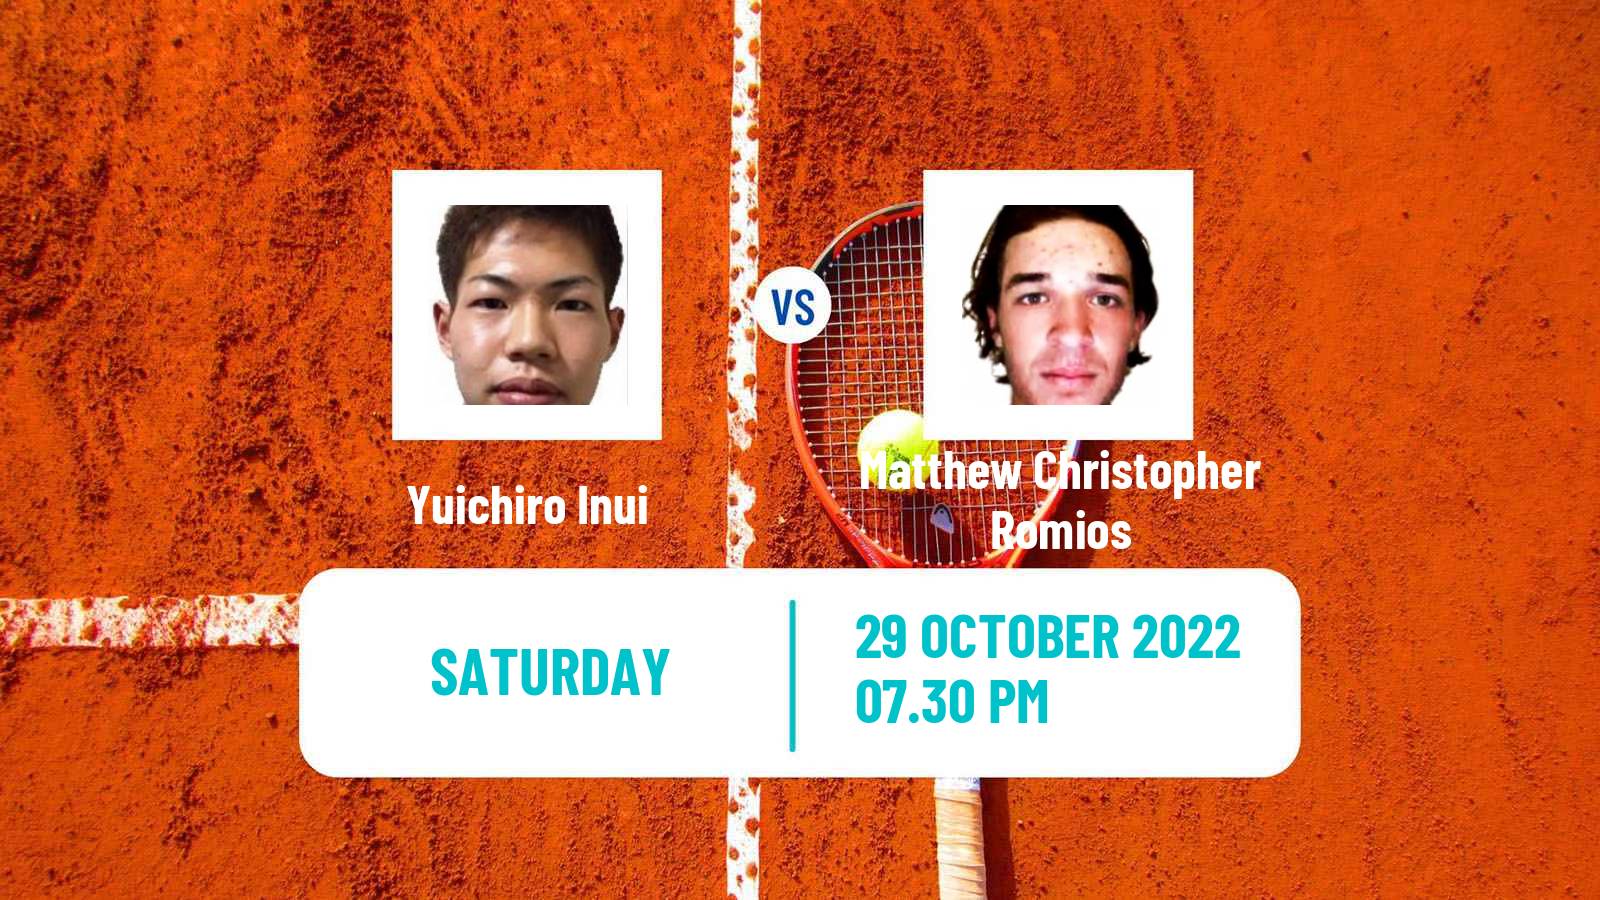 Tennis ATP Challenger Yuichiro Inui - Matthew Christopher Romios